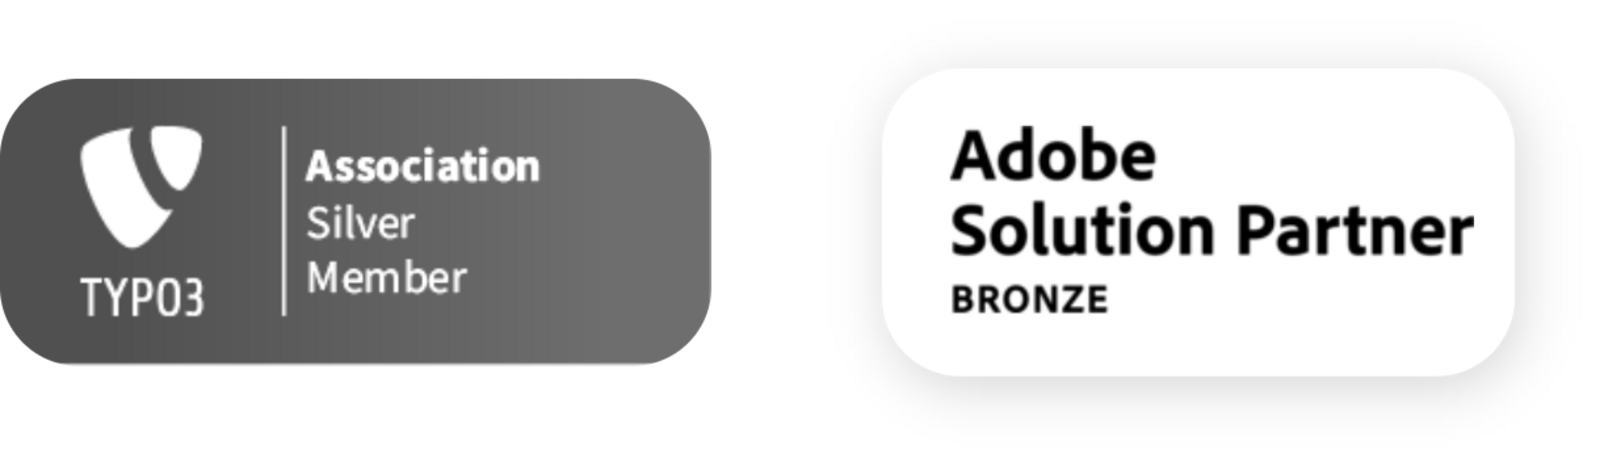 TYPO3 Silver Member / Adobe Solutions Partner Bronze